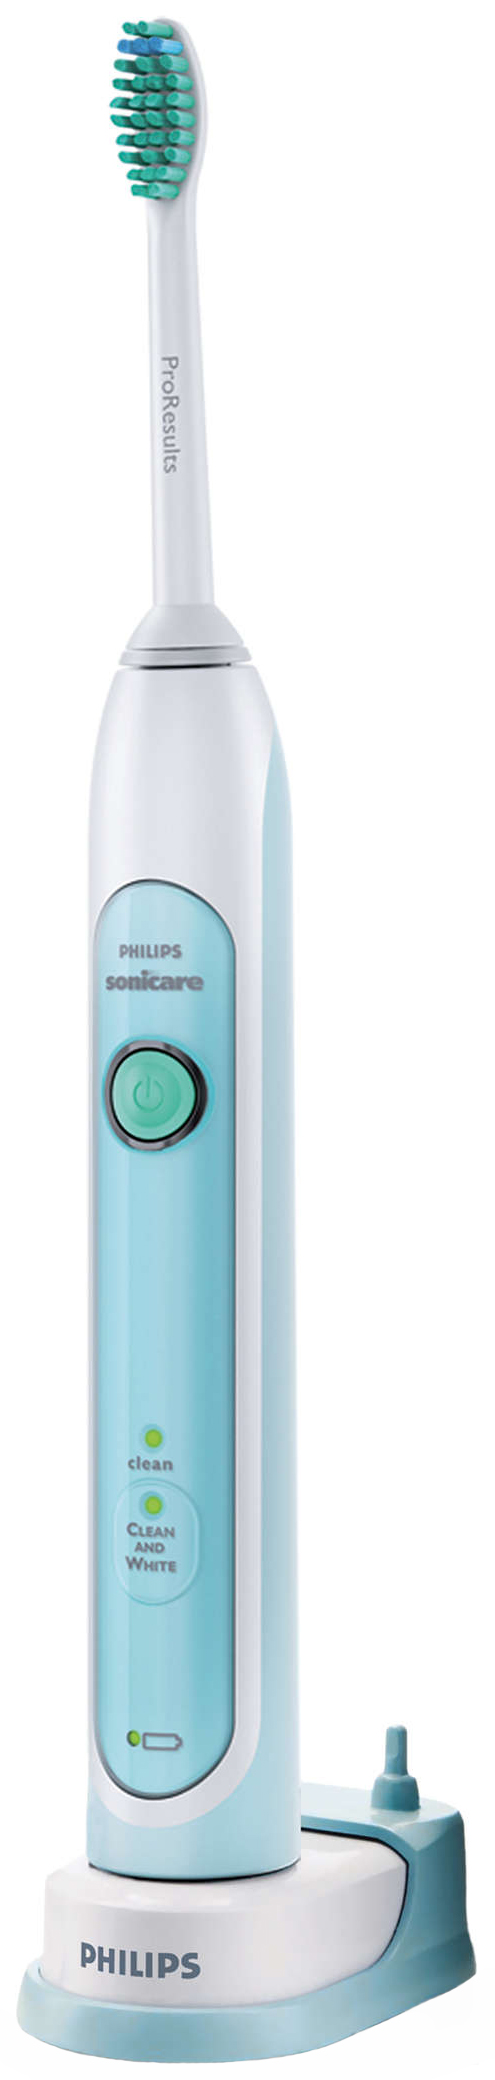 Philips зубная щетка sonicare healthywhite электрическая зубная щетка стоматологи